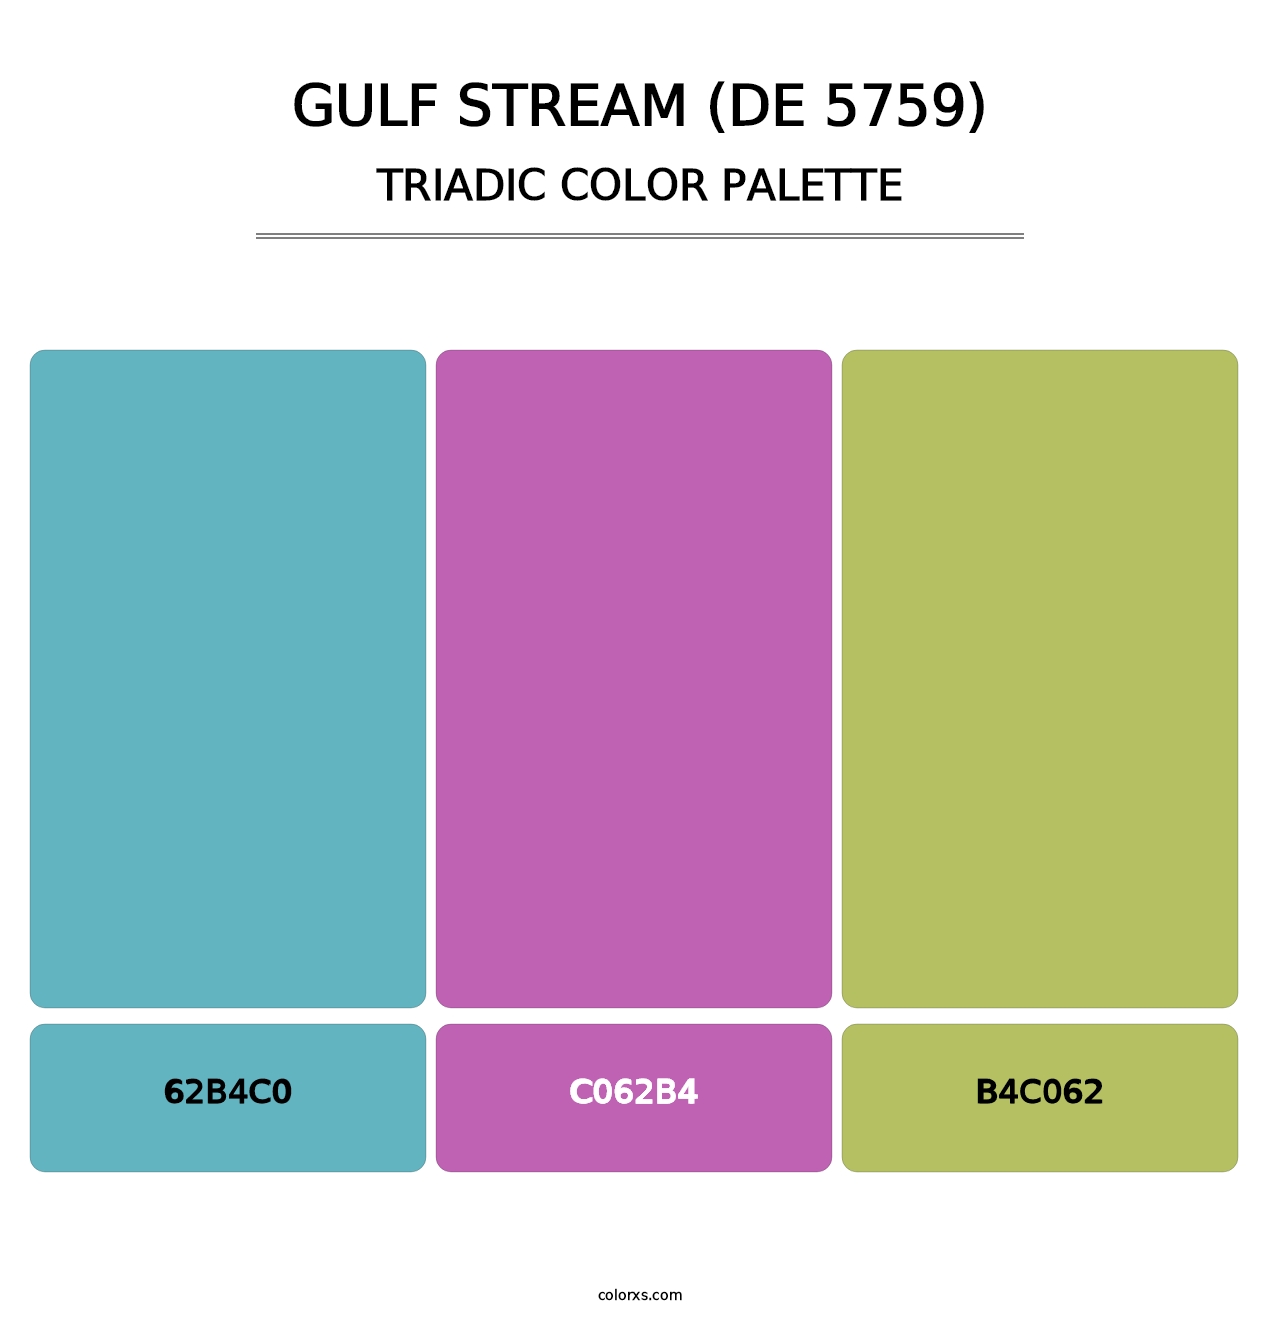 Gulf Stream (DE 5759) - Triadic Color Palette